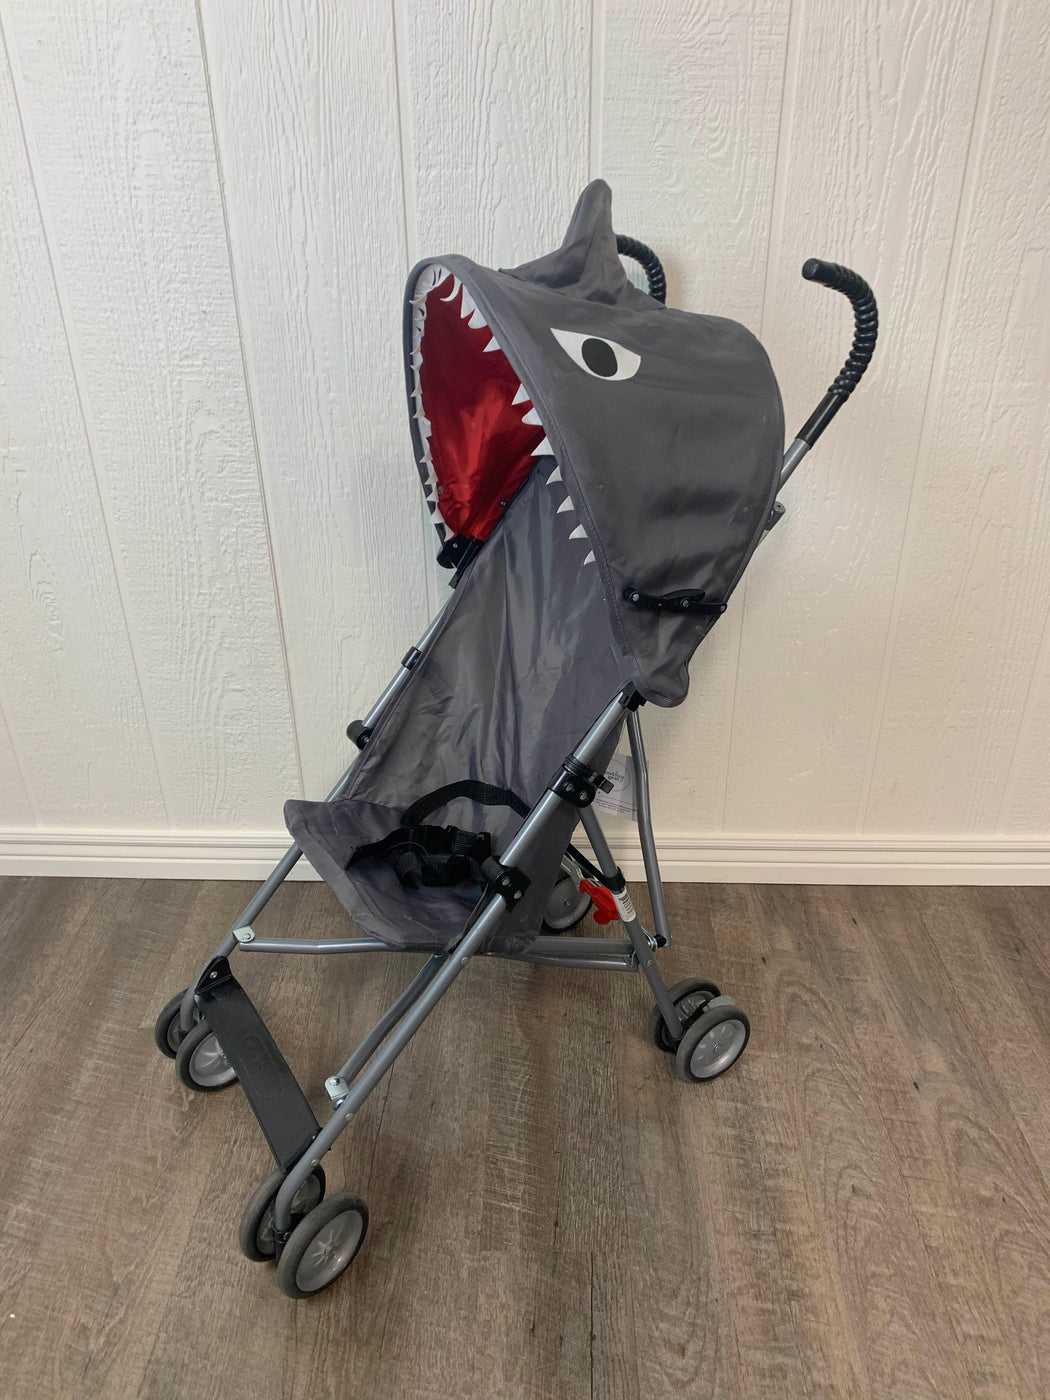 cosco shark stroller